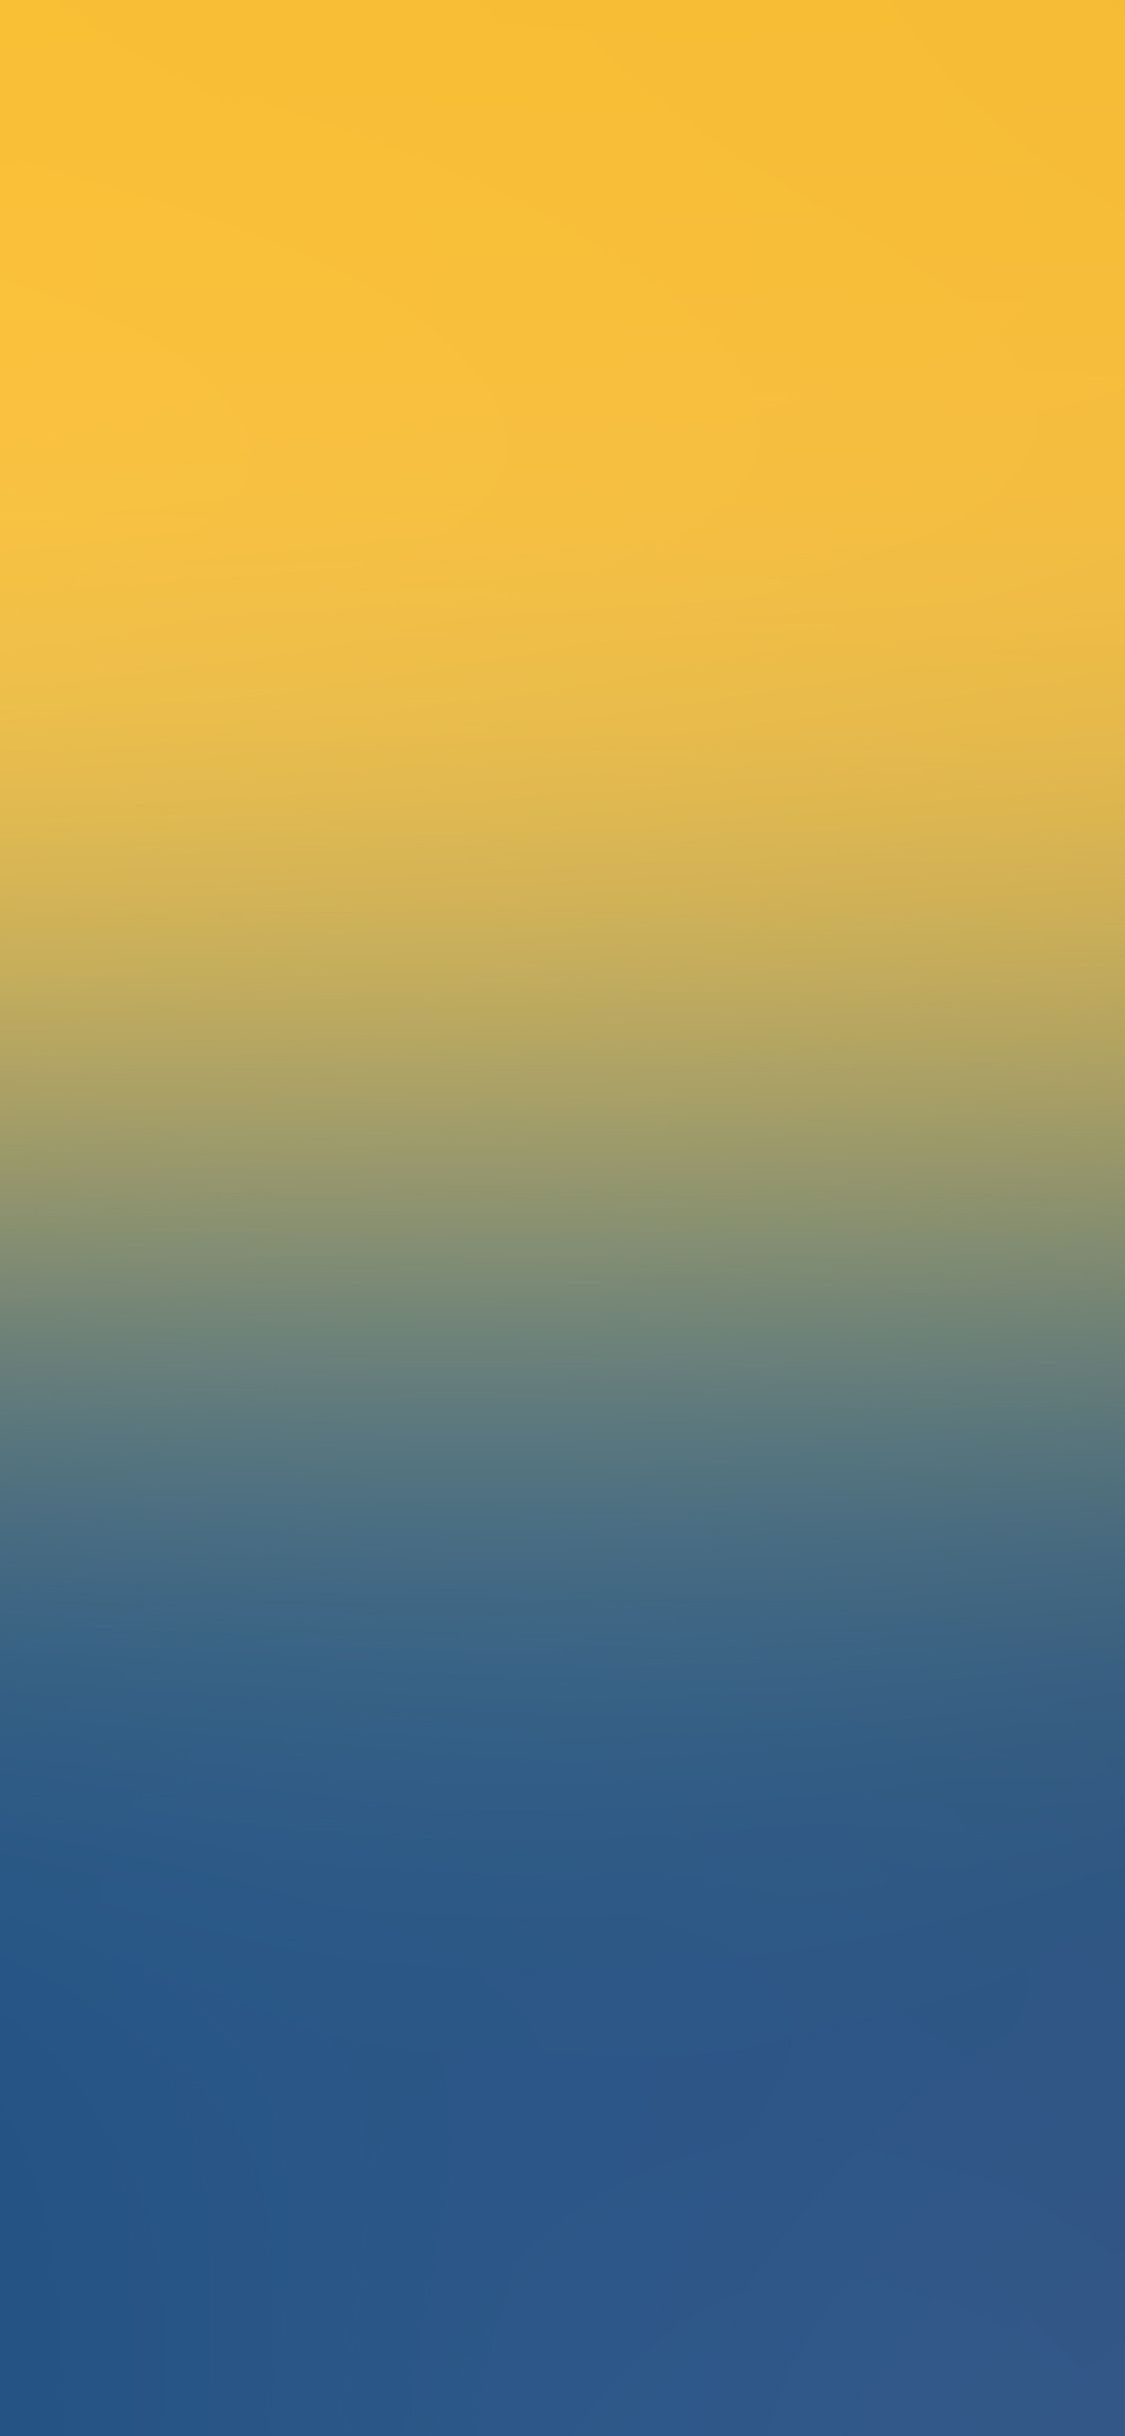 Spring Yellow Blue Gradation Blur Wallpaper